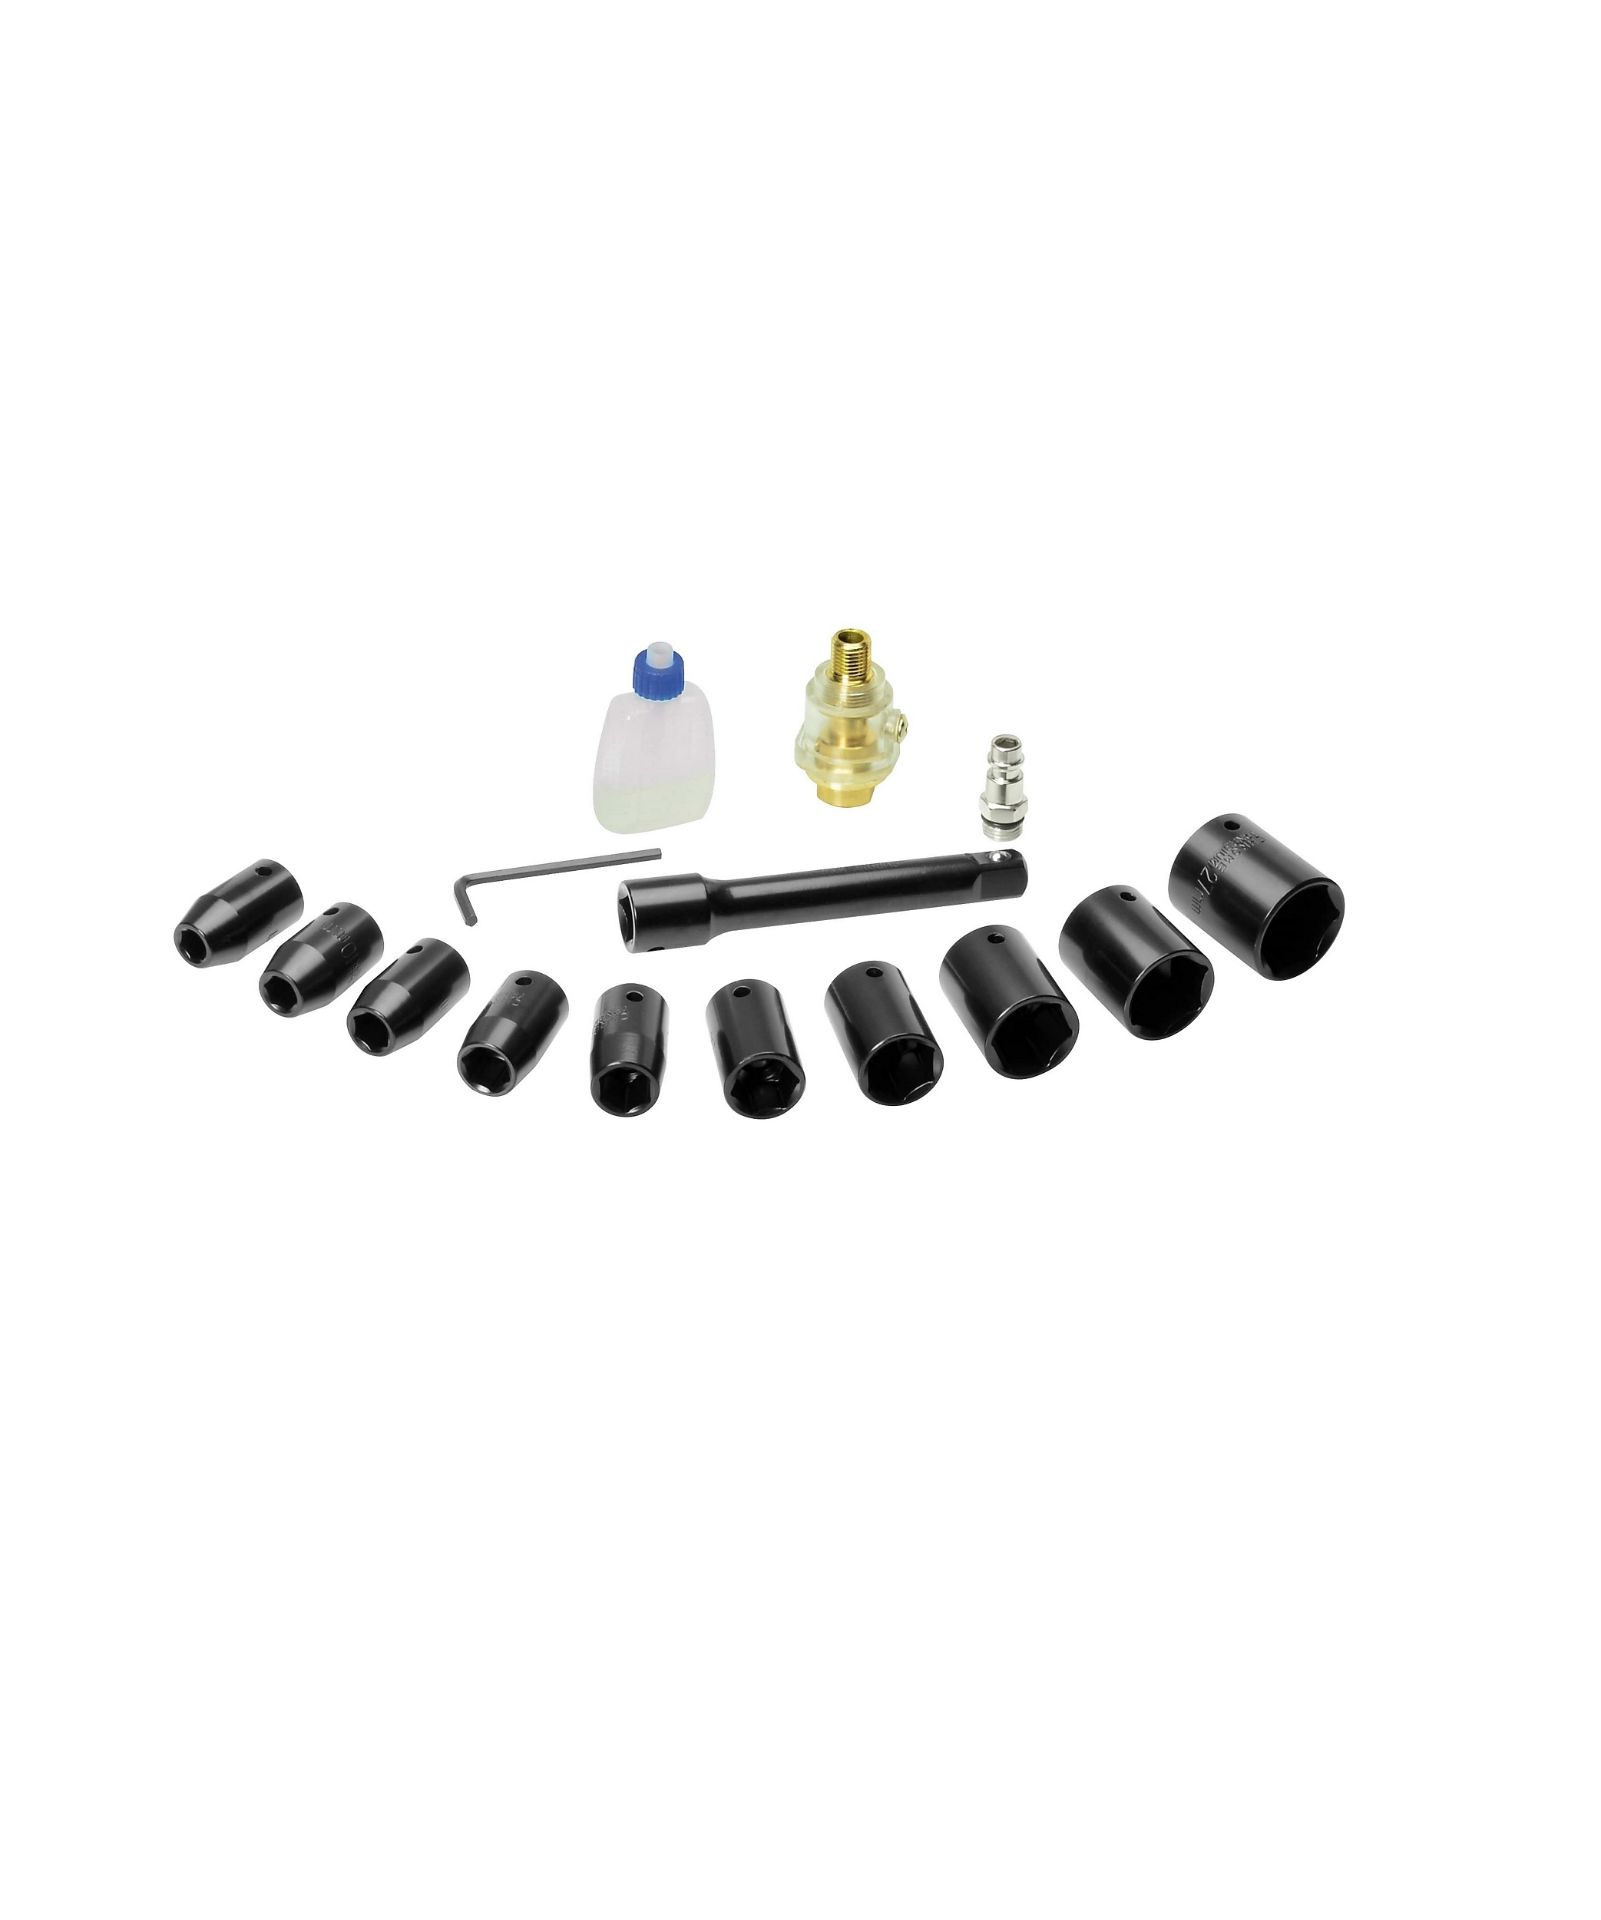 2 X Brand New Black & Decker Impact Wrench Kit, • 1/2 inch Impact wrench • 10 Impact Sockets (9,10, - Image 3 of 3